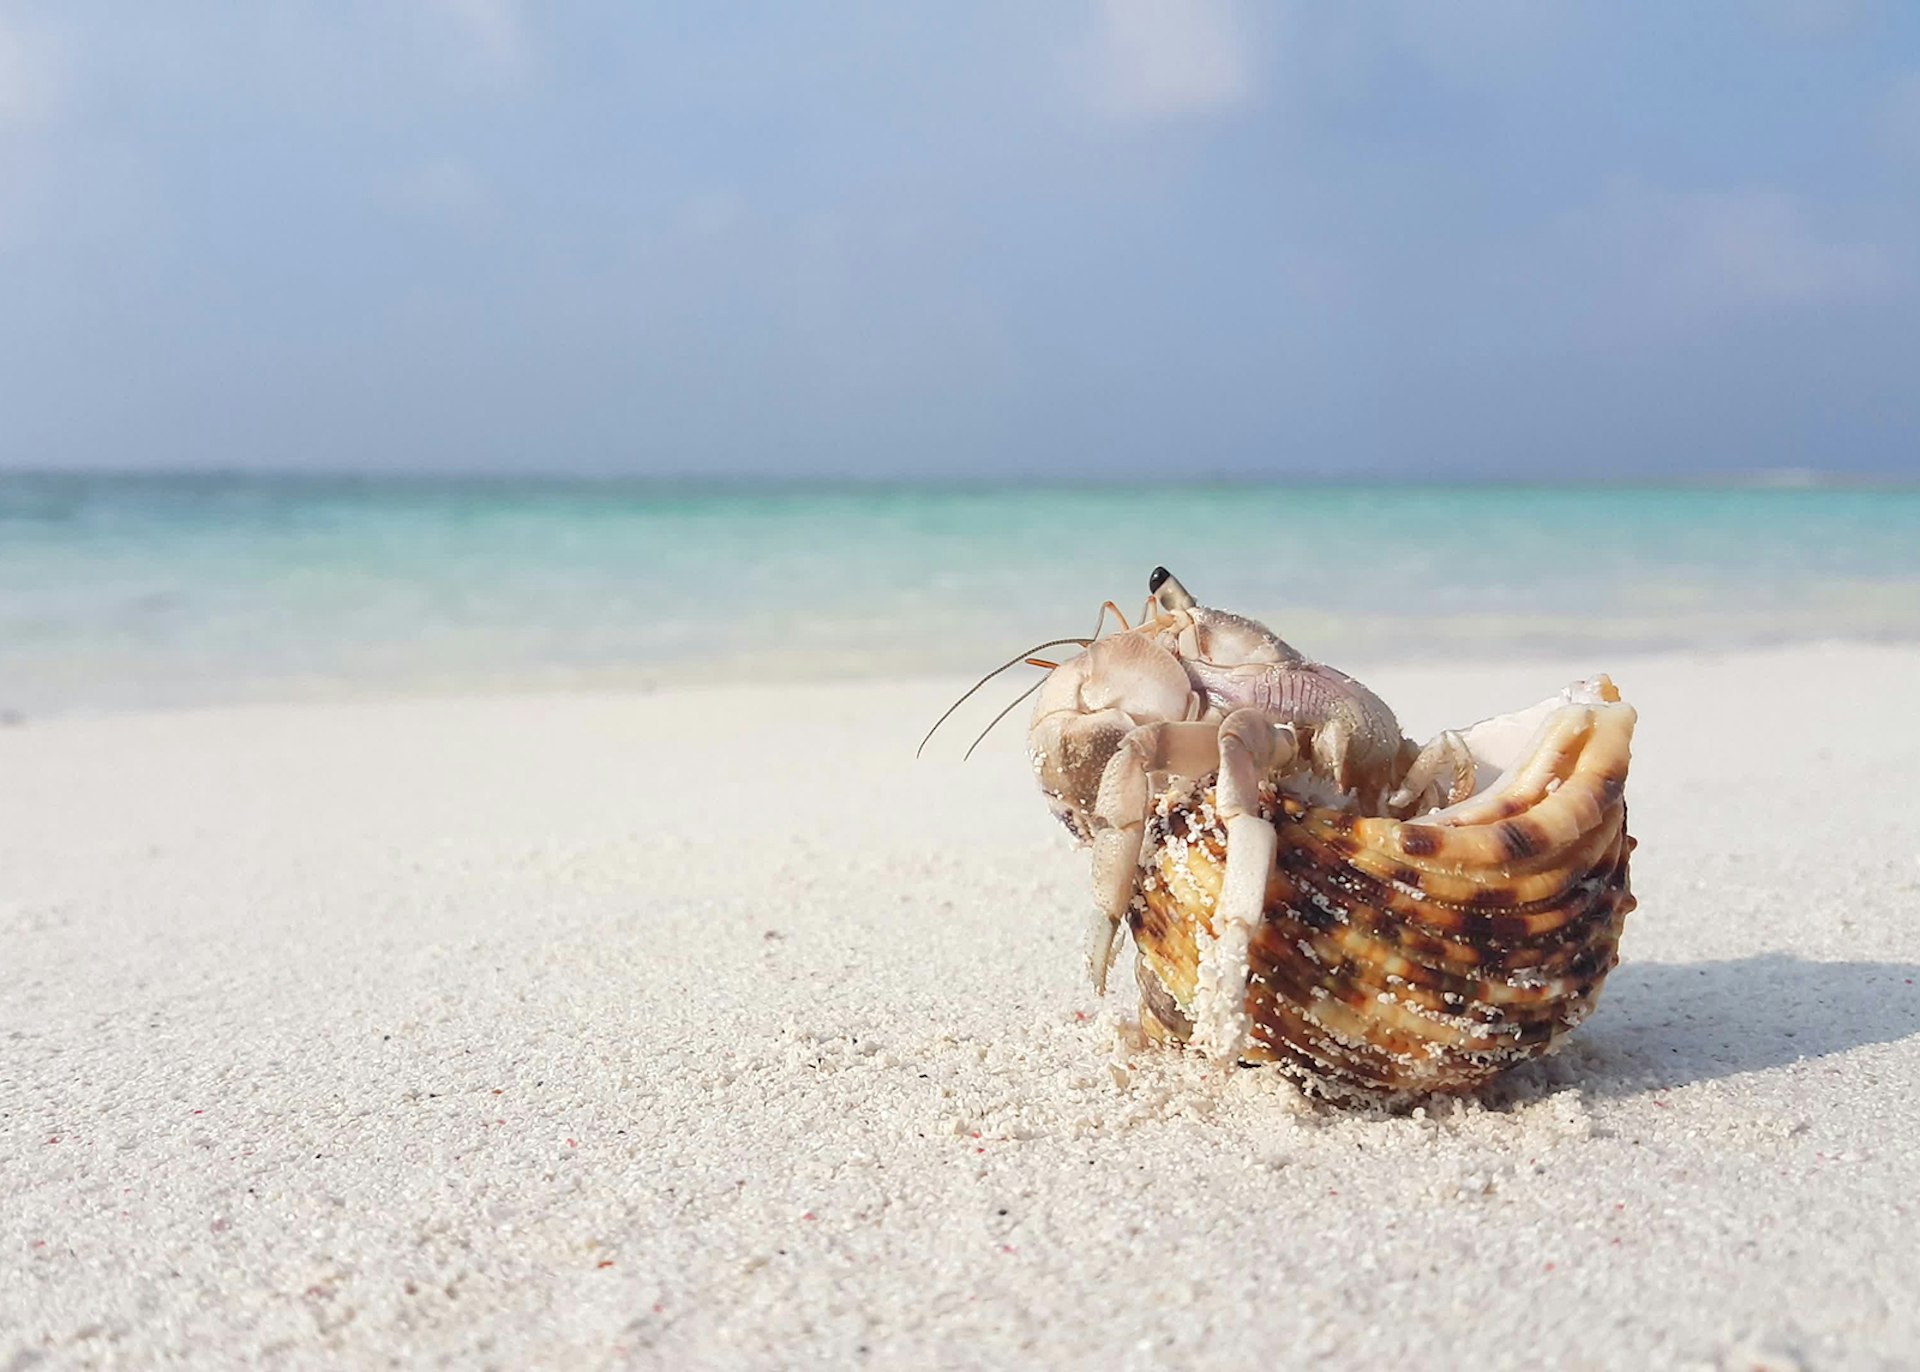 Hermit crab on a tropical beach © MotionWorksFilmStudio / Getty Images